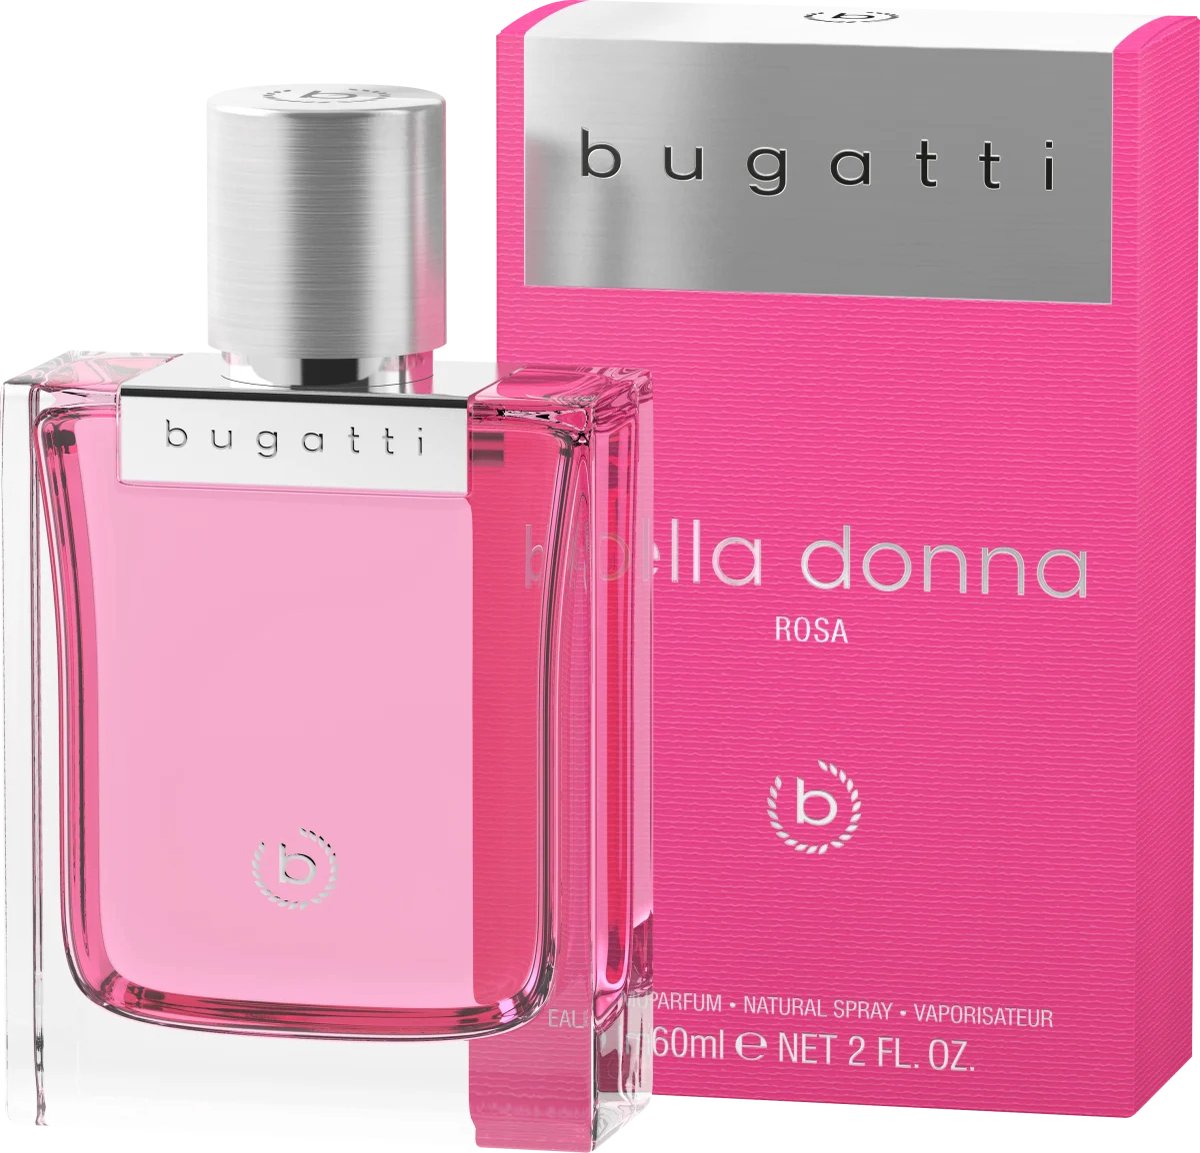 Bella donna Rosa Eau de parfum 60ml